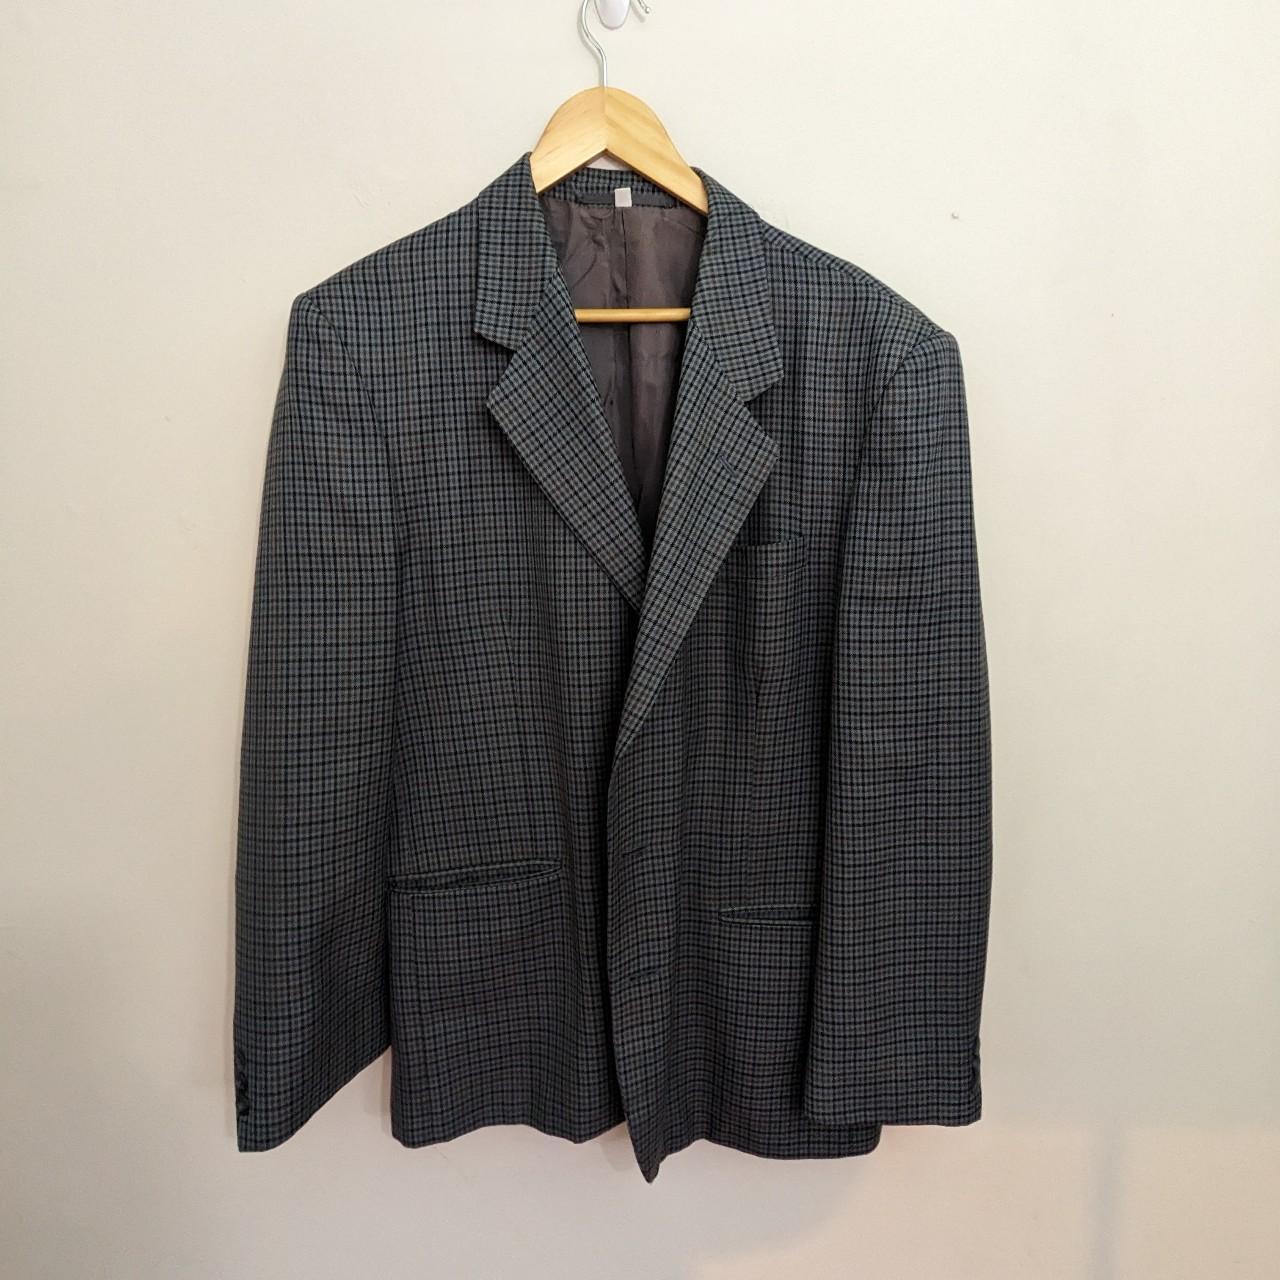 Vintage Suit Jacket / Checked Blazer Size 44